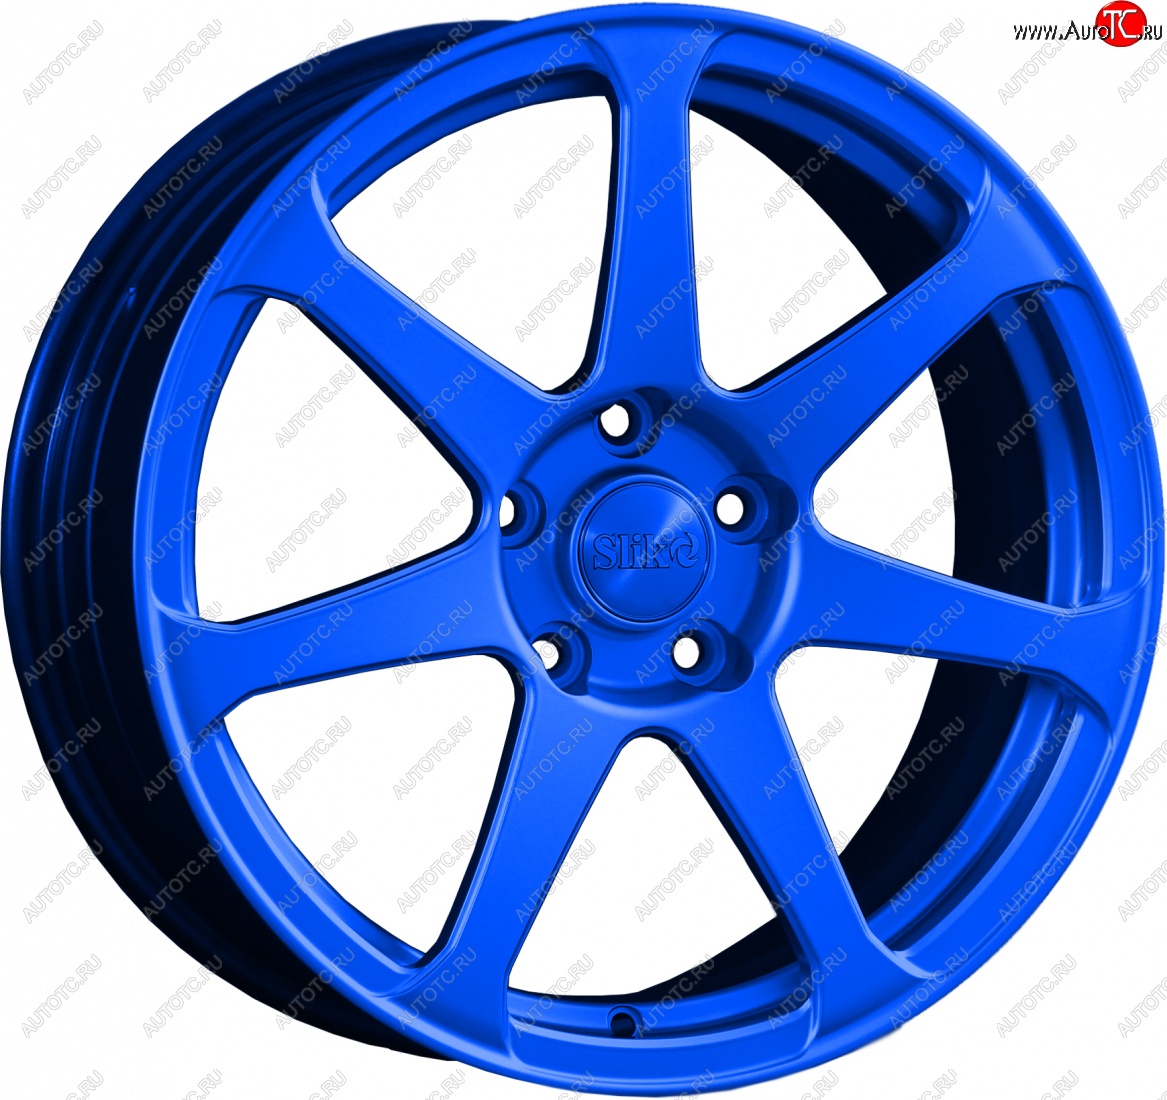 14 499 р. Кованый диск Slik classik R17x7.5 Candy BLUE синий 7.5x17 Chevrolet Malibu 8 (2013-2015) 5x110.0xDIA65.1xET40.0 (Цвет: Candy BLUE синий 7.5x17)